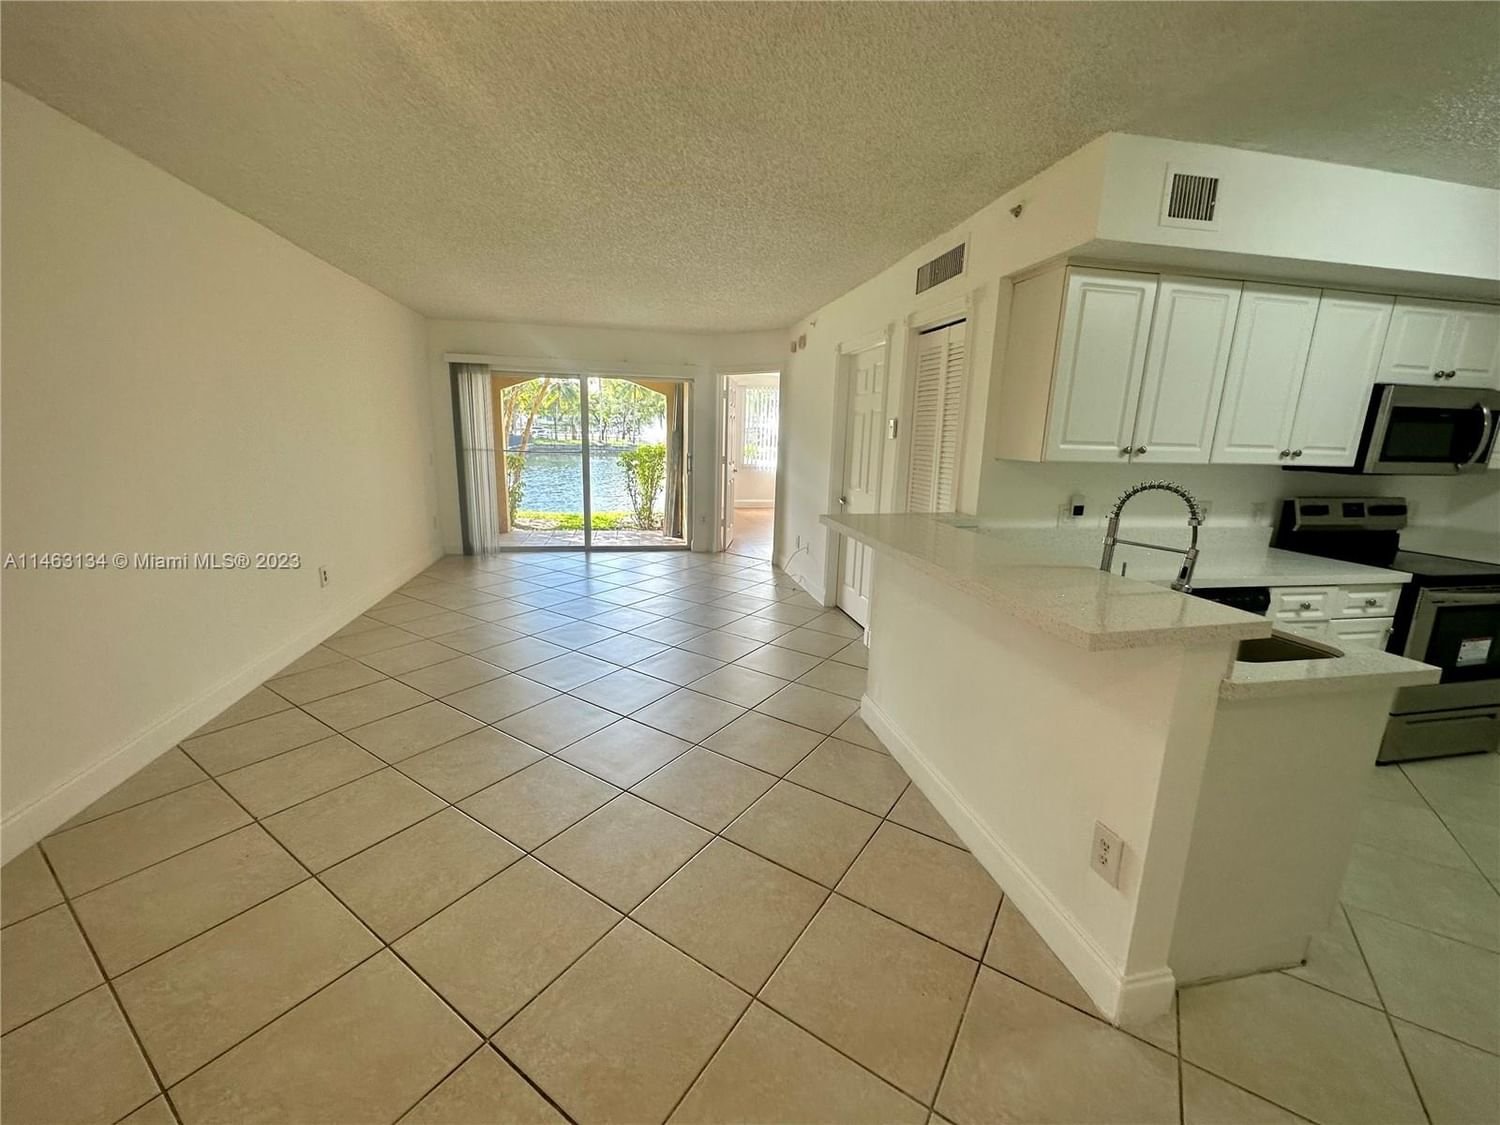 Real estate property located at , Broward County, LA VIA CONDO, Pembroke Pines, FL